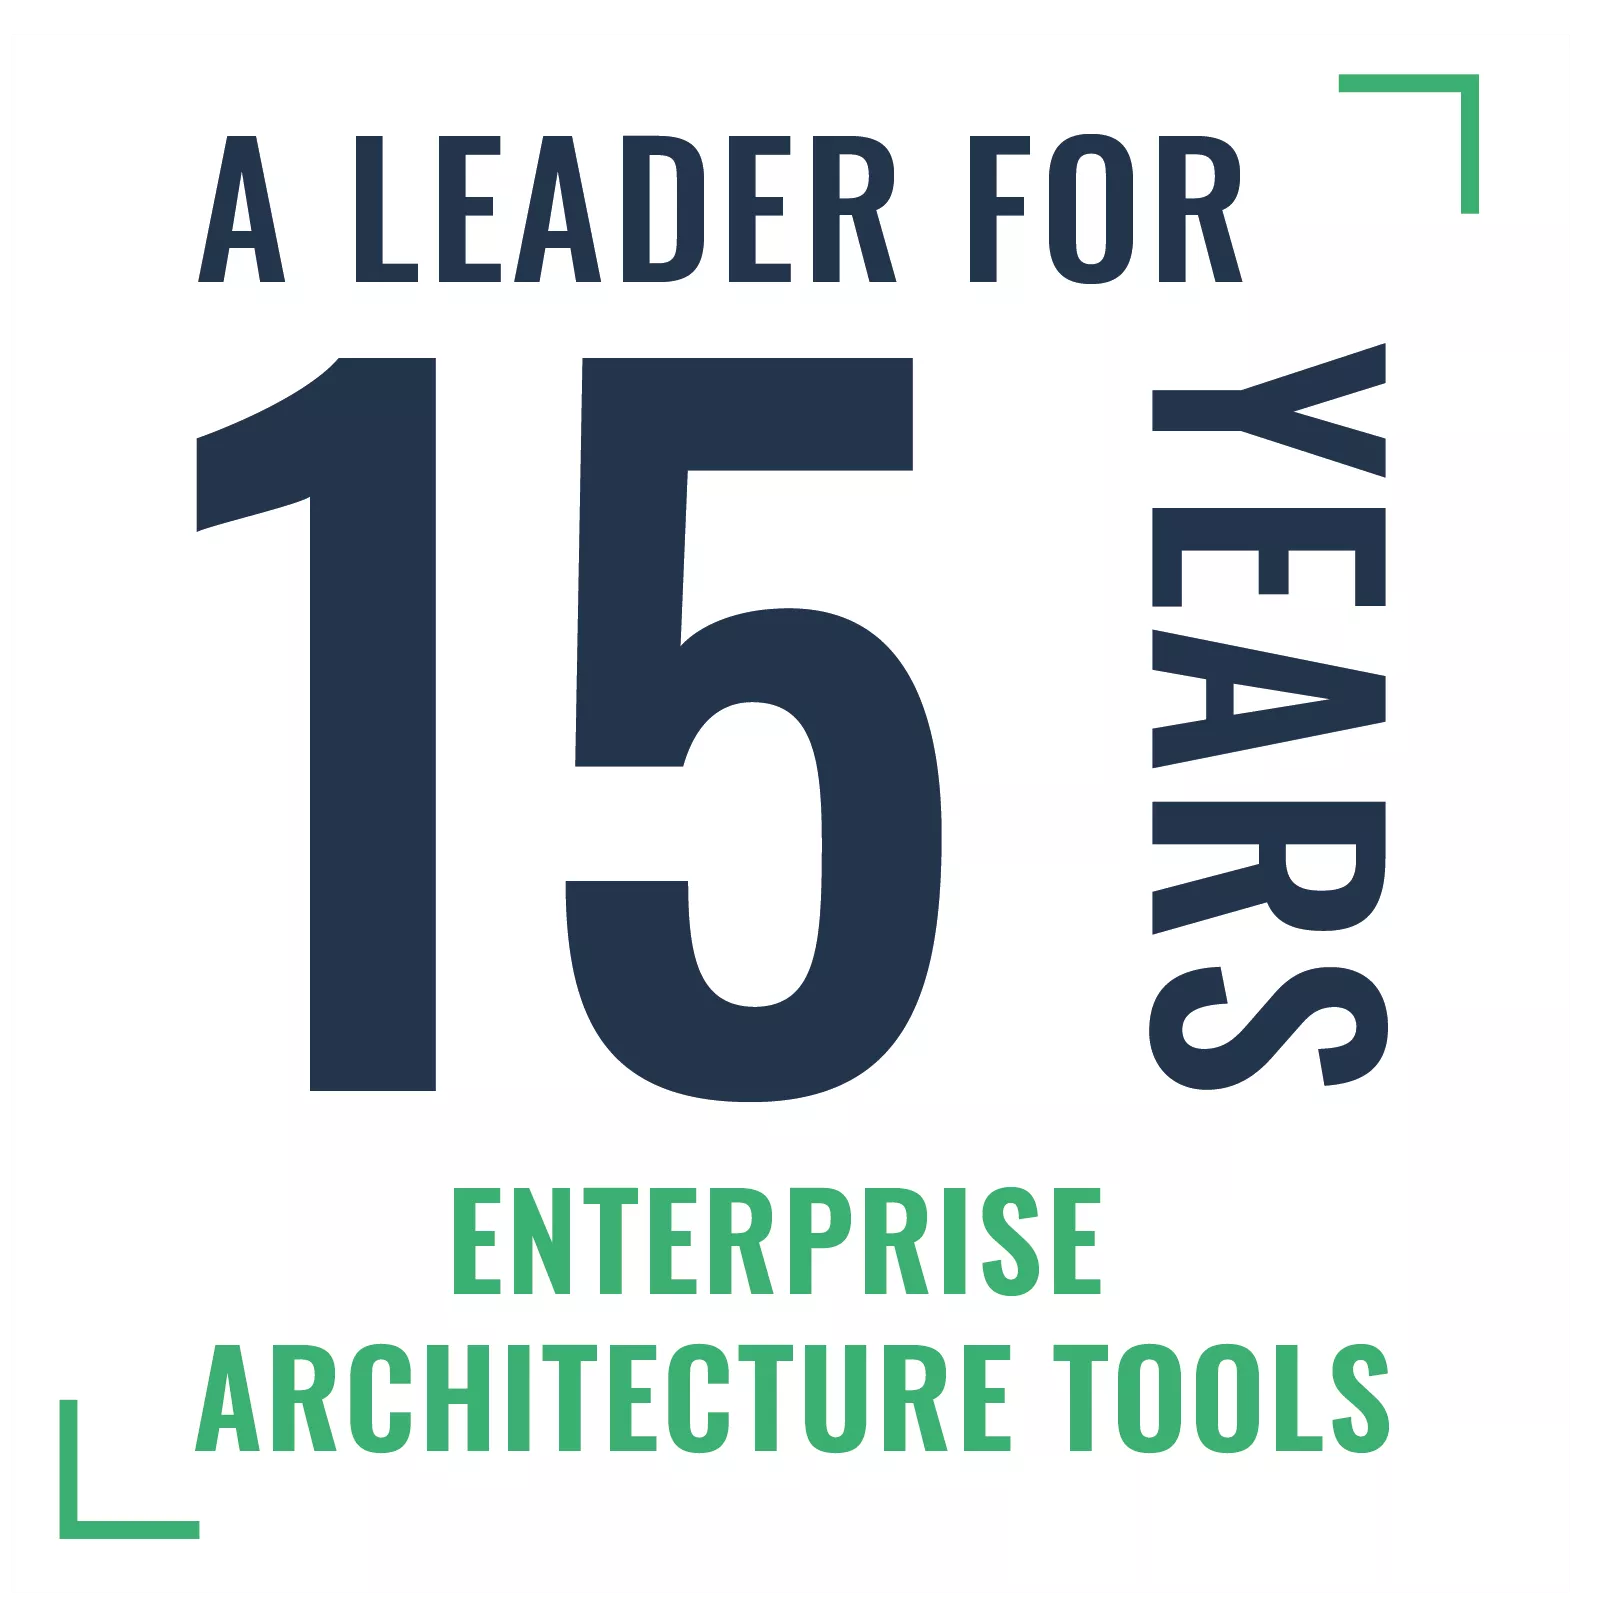 MEGA Leader for enterprise architecture tools